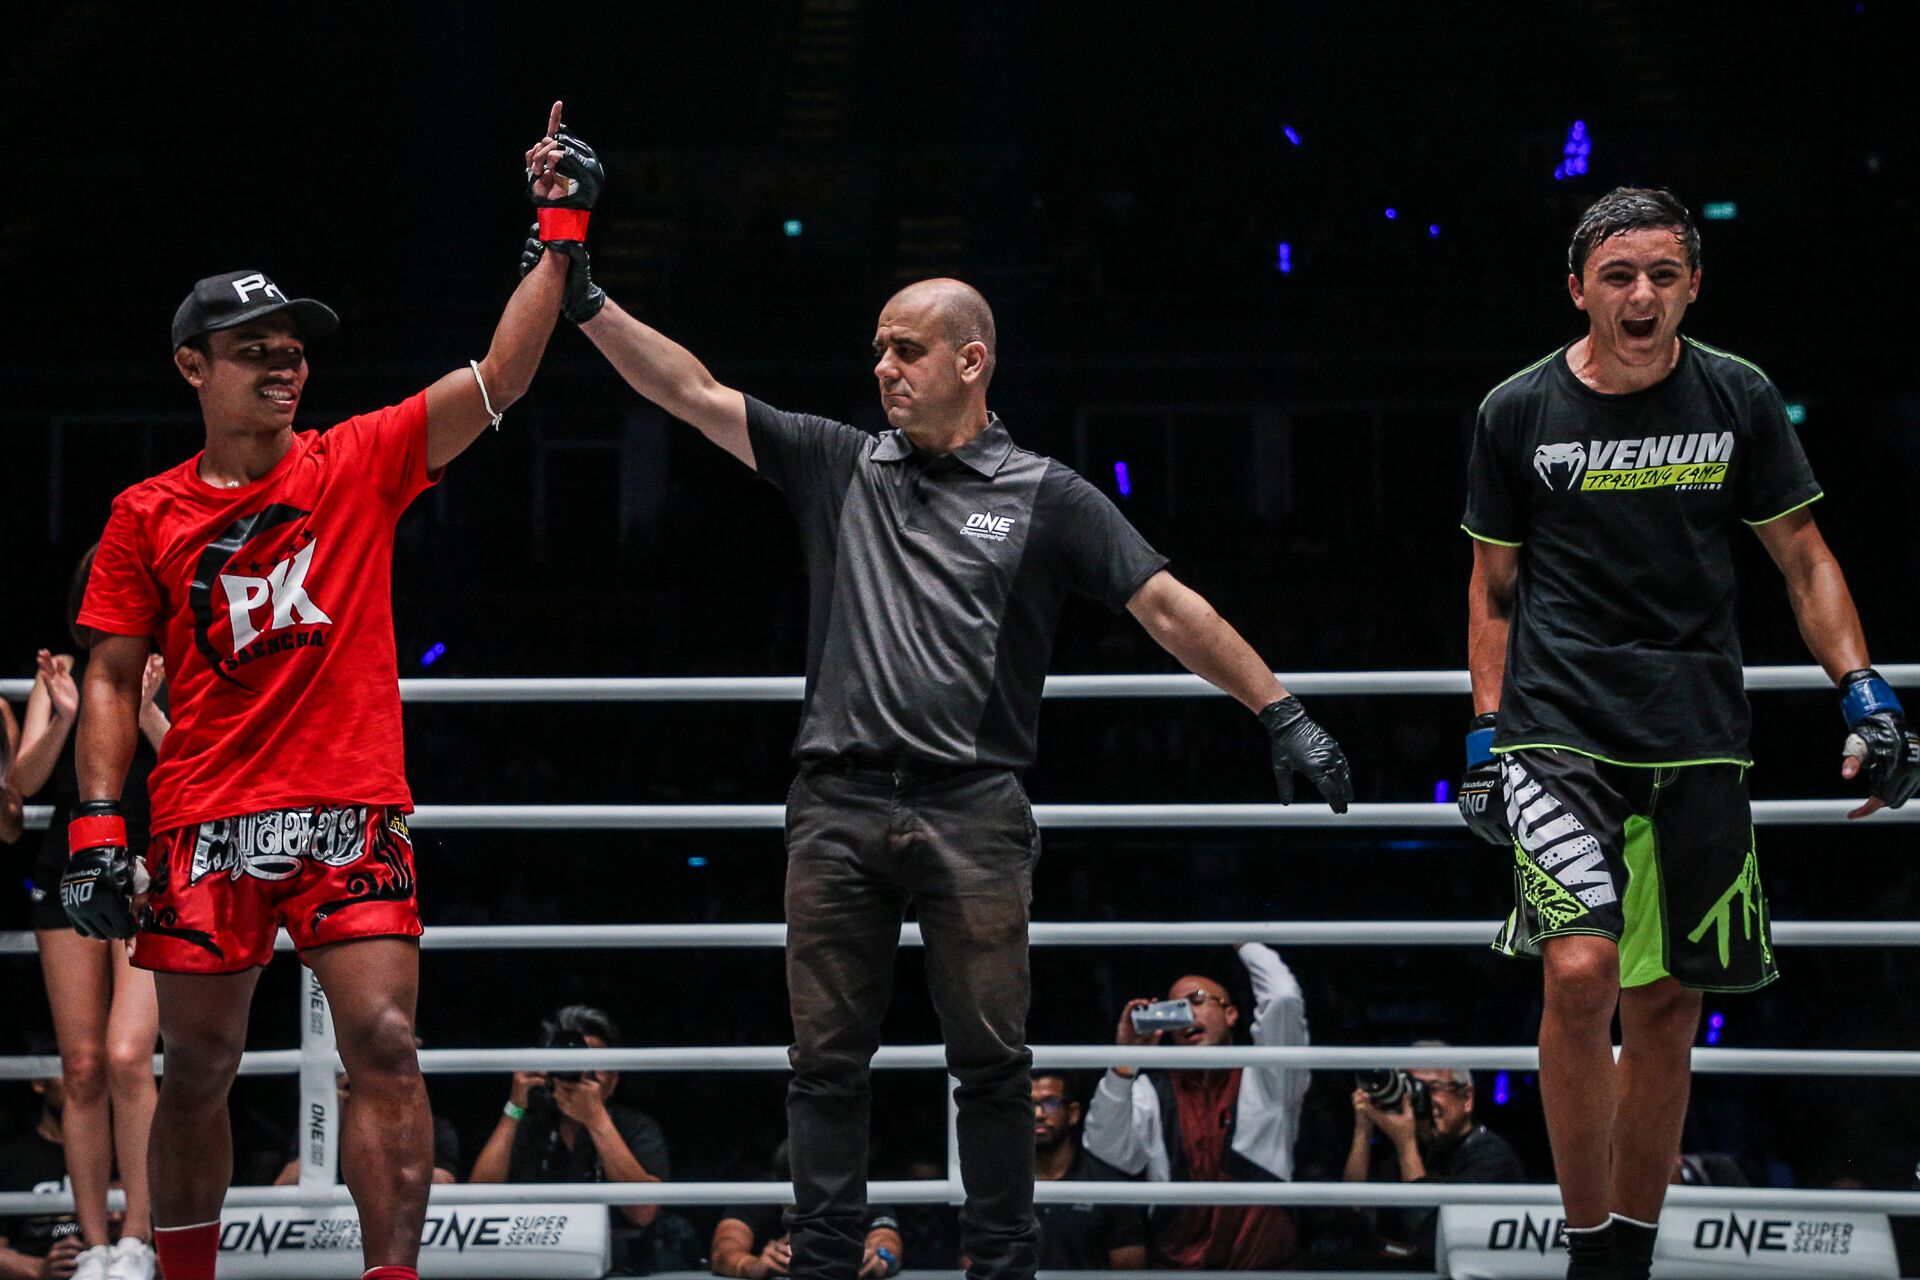 Kongsak P.K.Saenchaimuaythaigym earns 1st ONE Super Series win at 'ONE: Clash of Legends' in Bangkok, Thailand